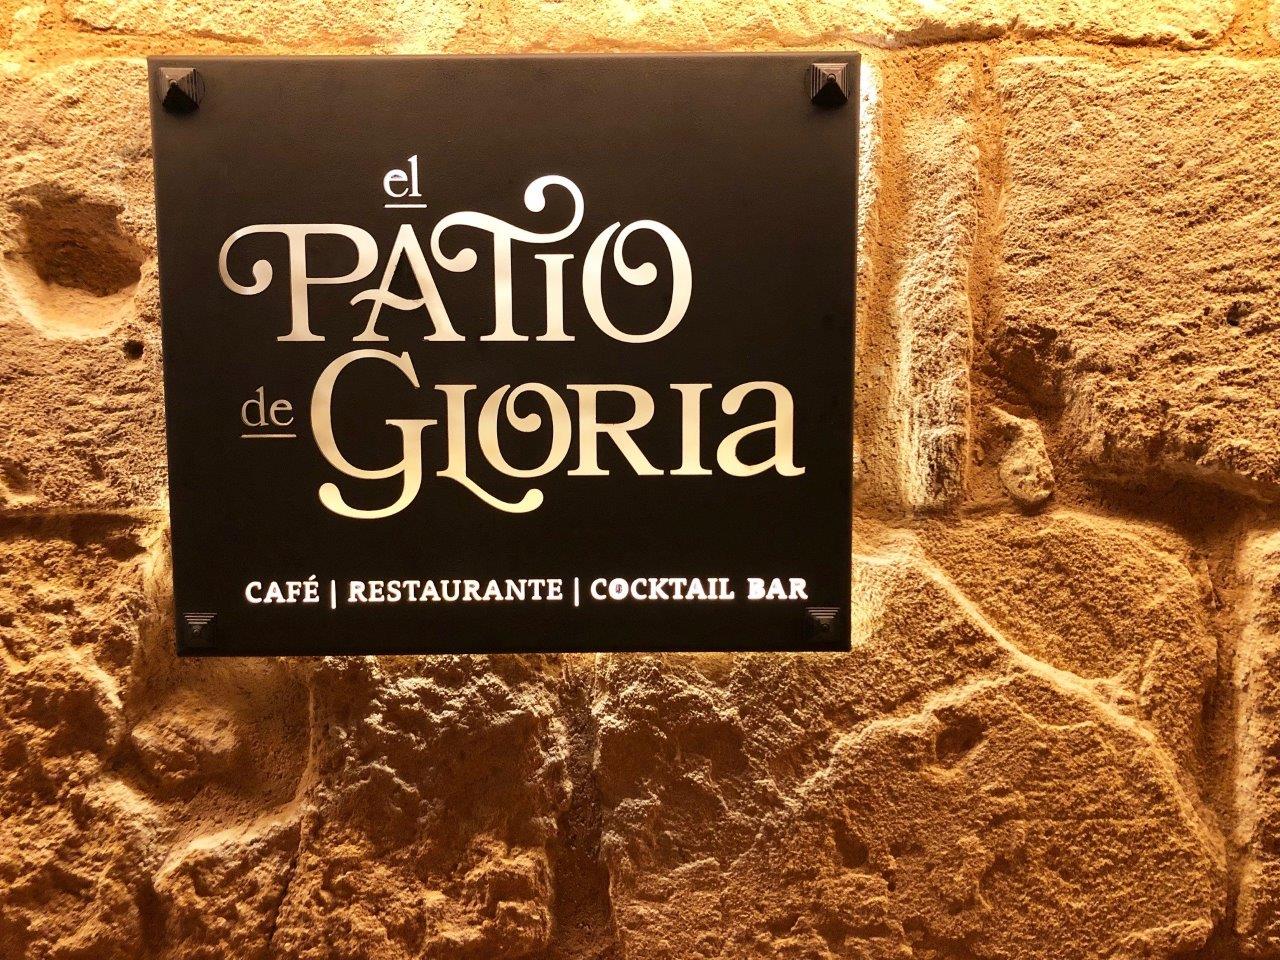 El Patio de Gloria ? the new cocktail & dining experience in Palma, Mallorca